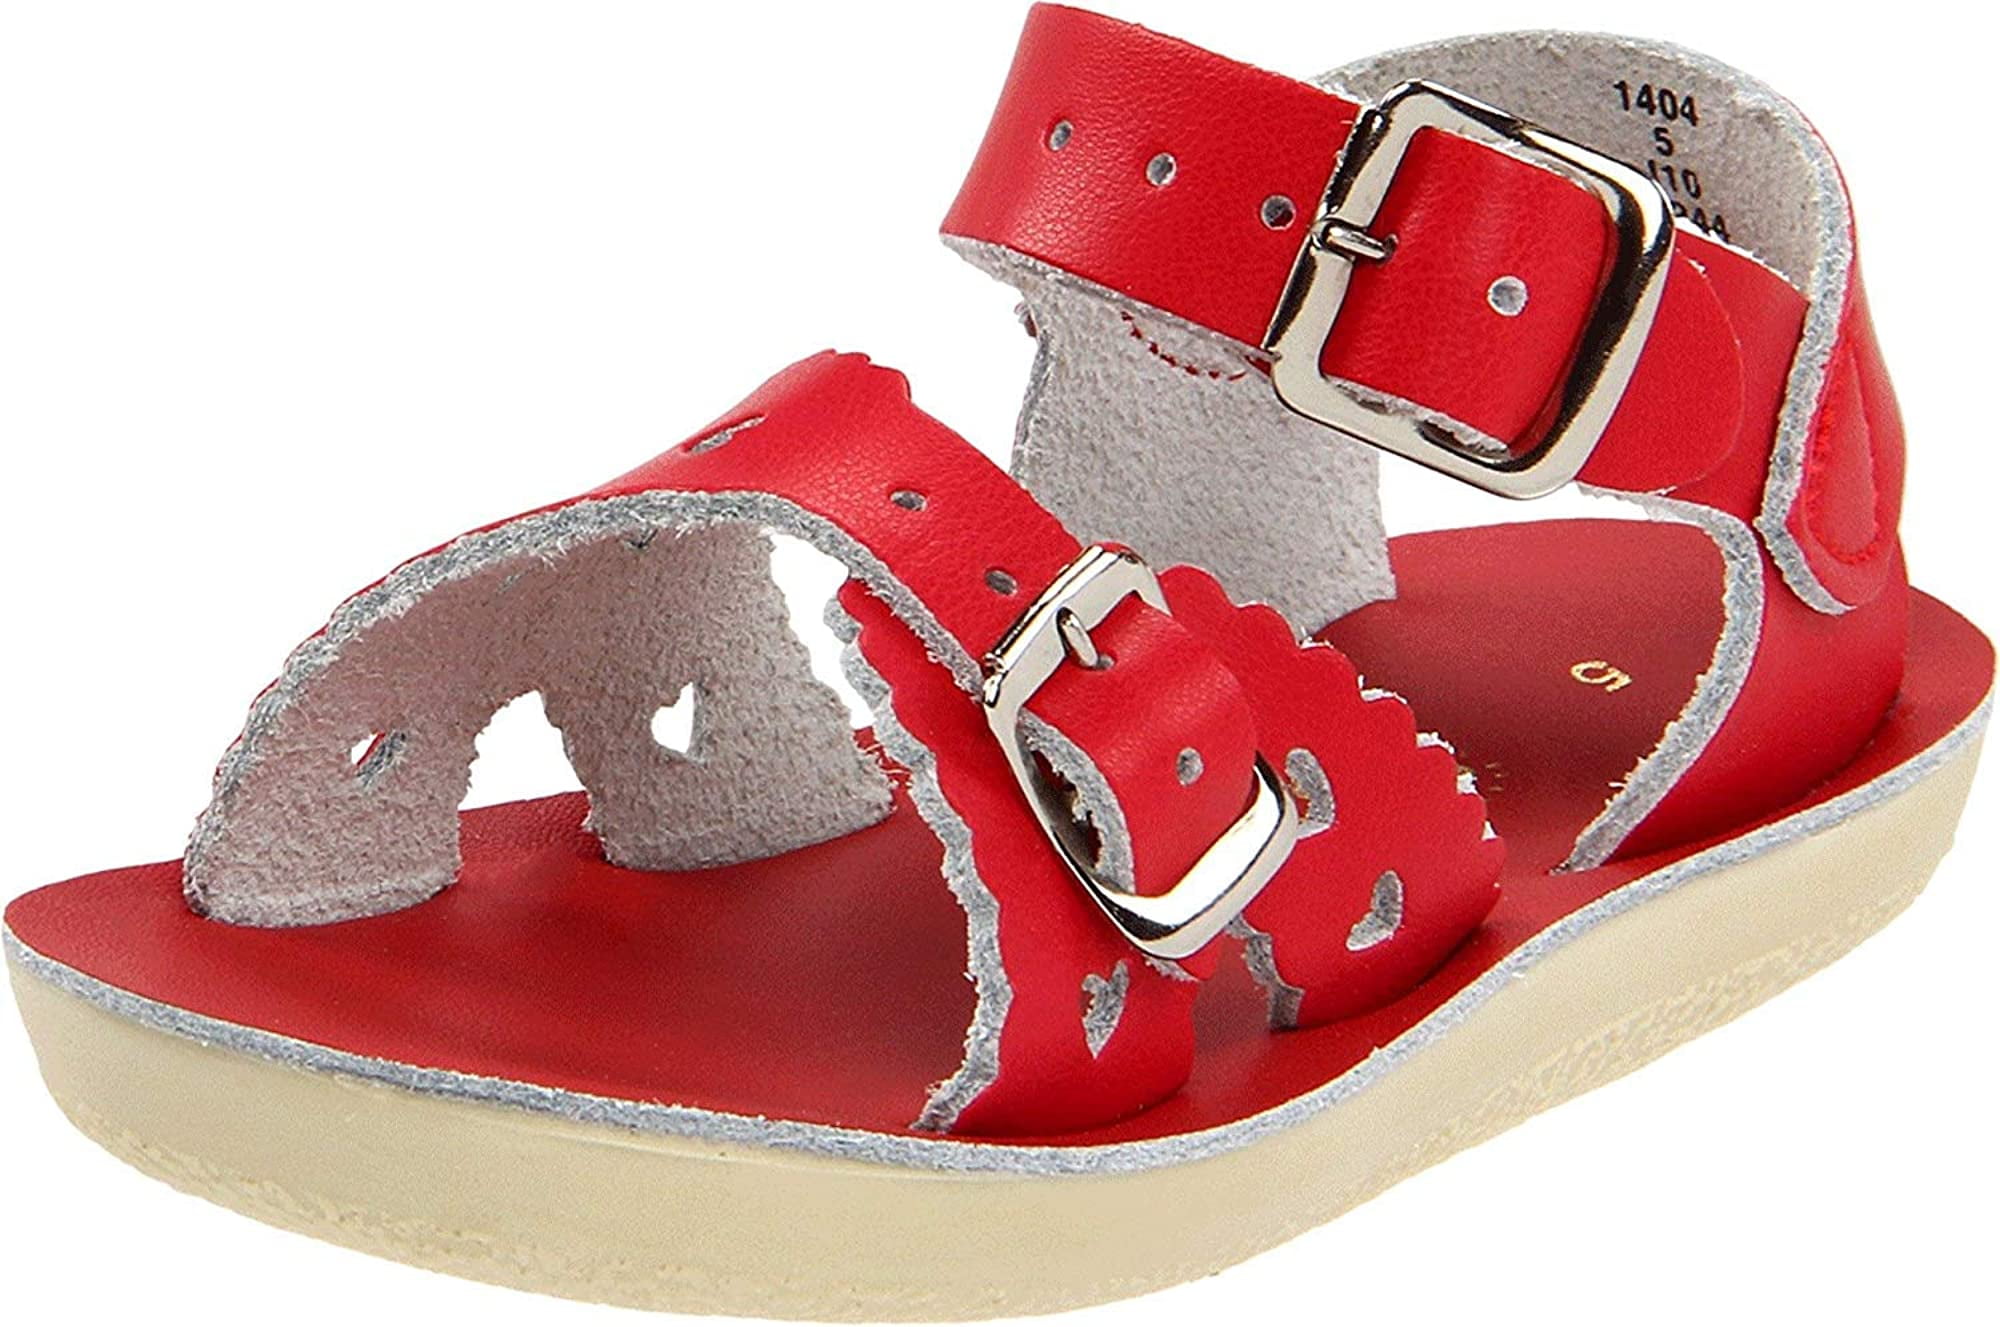 Toddler/Little Kid/Big Kid/Women's Salt Water Sandals by Hoy Shoe Sweetheart Sandal 